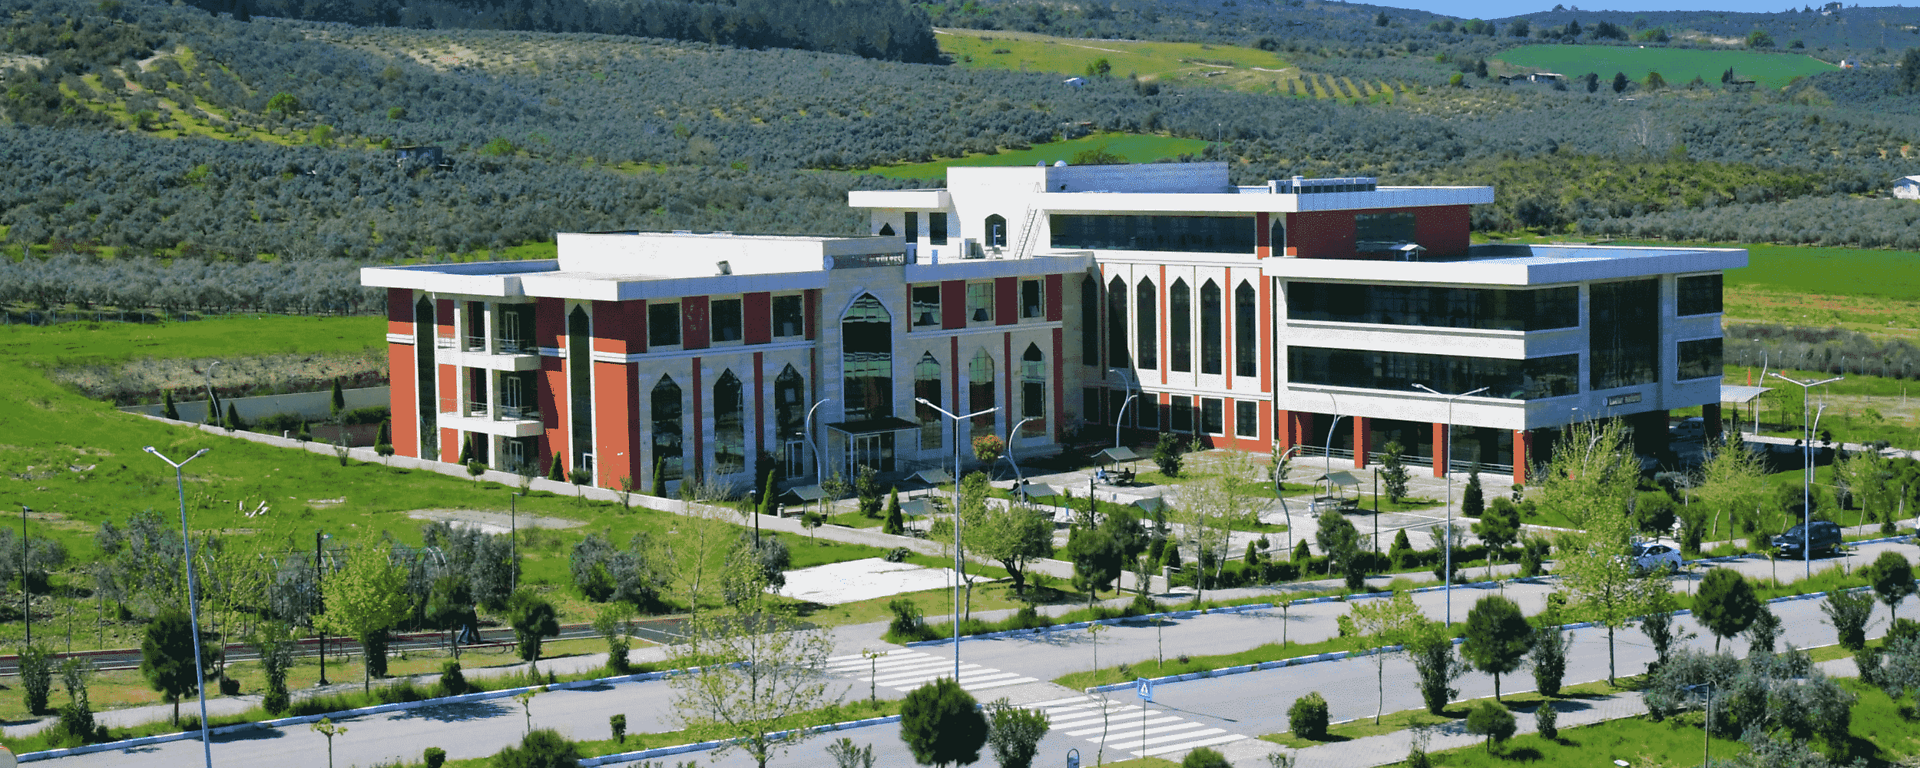 osmaniy universitesi find and study 8 - Osmaniye Korkut Ata Üniversitesi